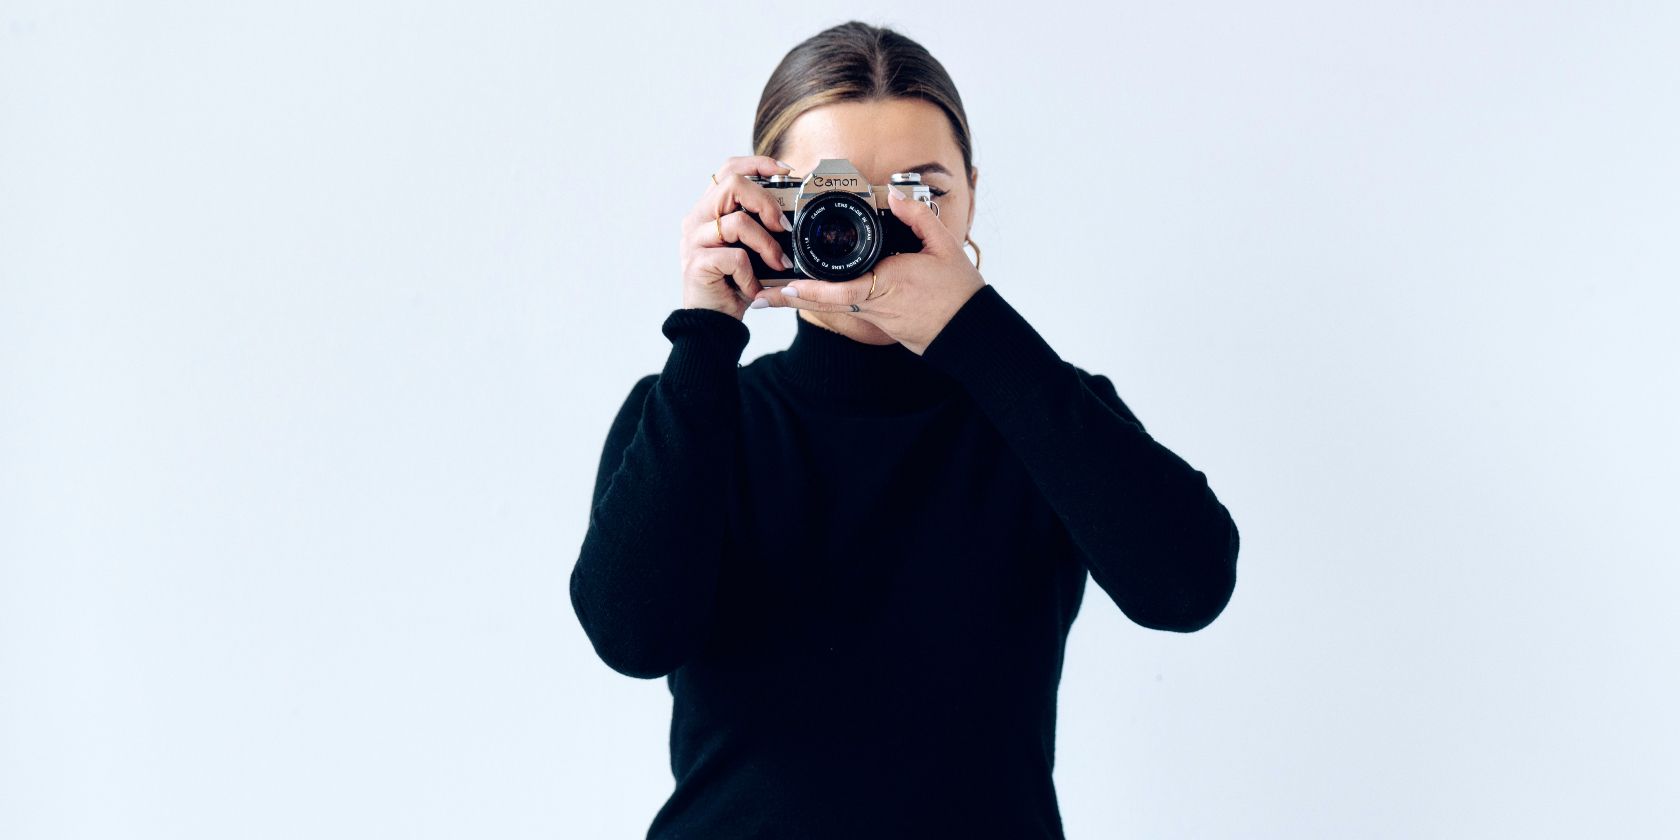 How to Take Good Headshot Photography: 8 Tips